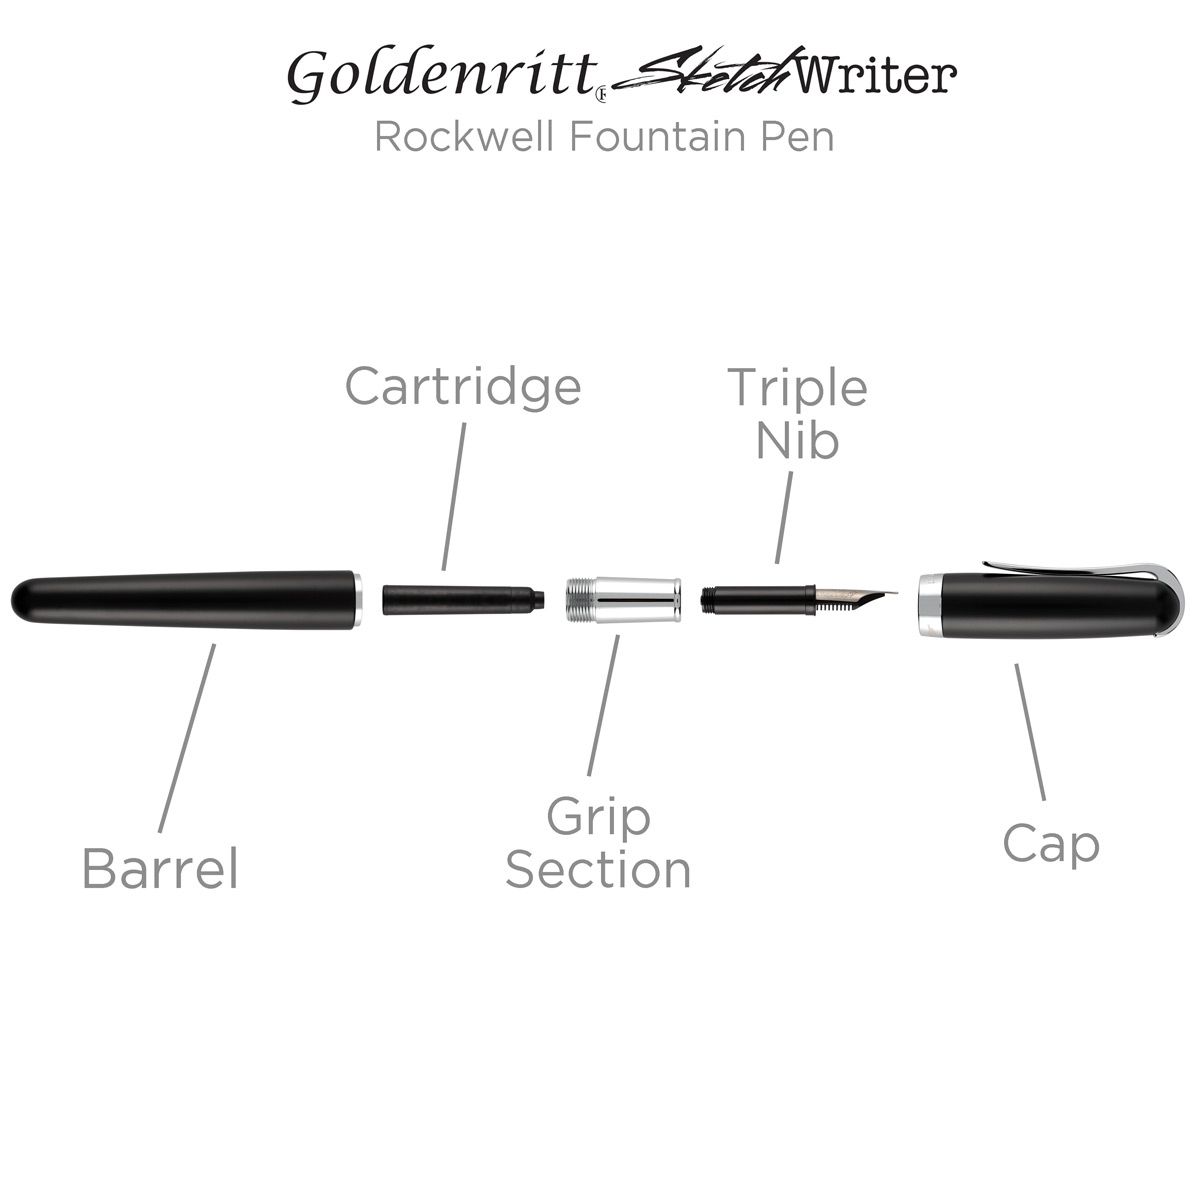 Goldenritt Sketchwriter Rockwell Fountain Pen Parts